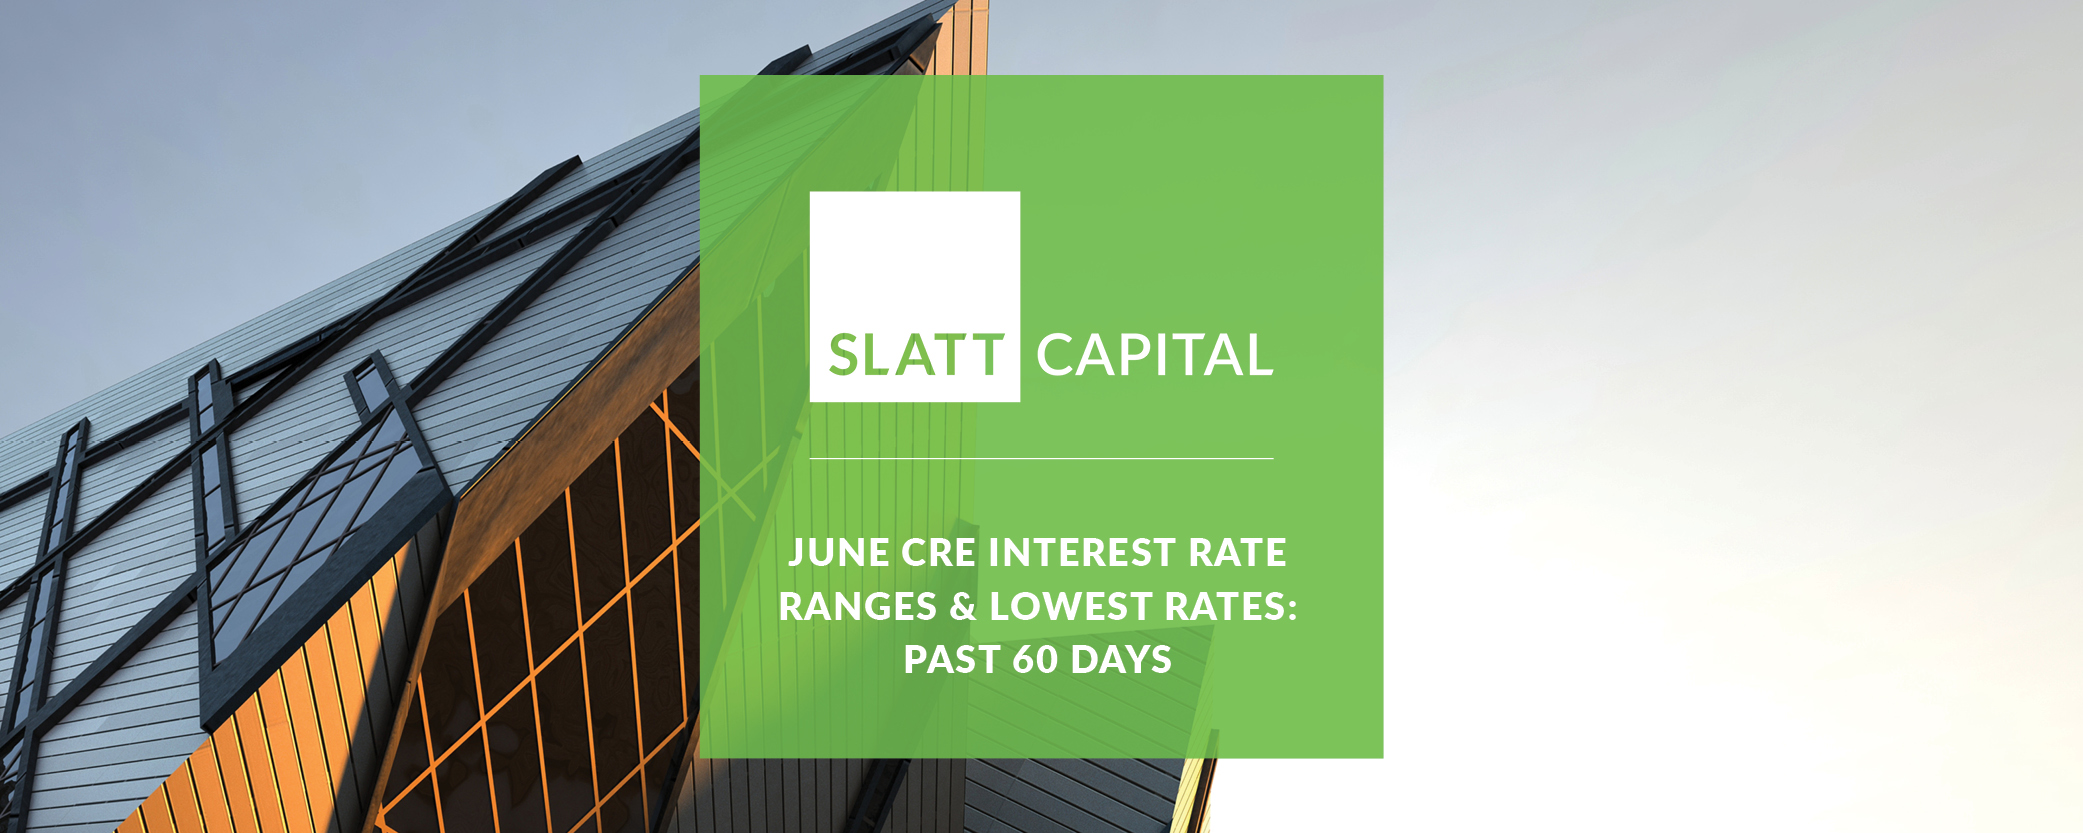 June cre interest rate ranges & lowest rates: past 60 days